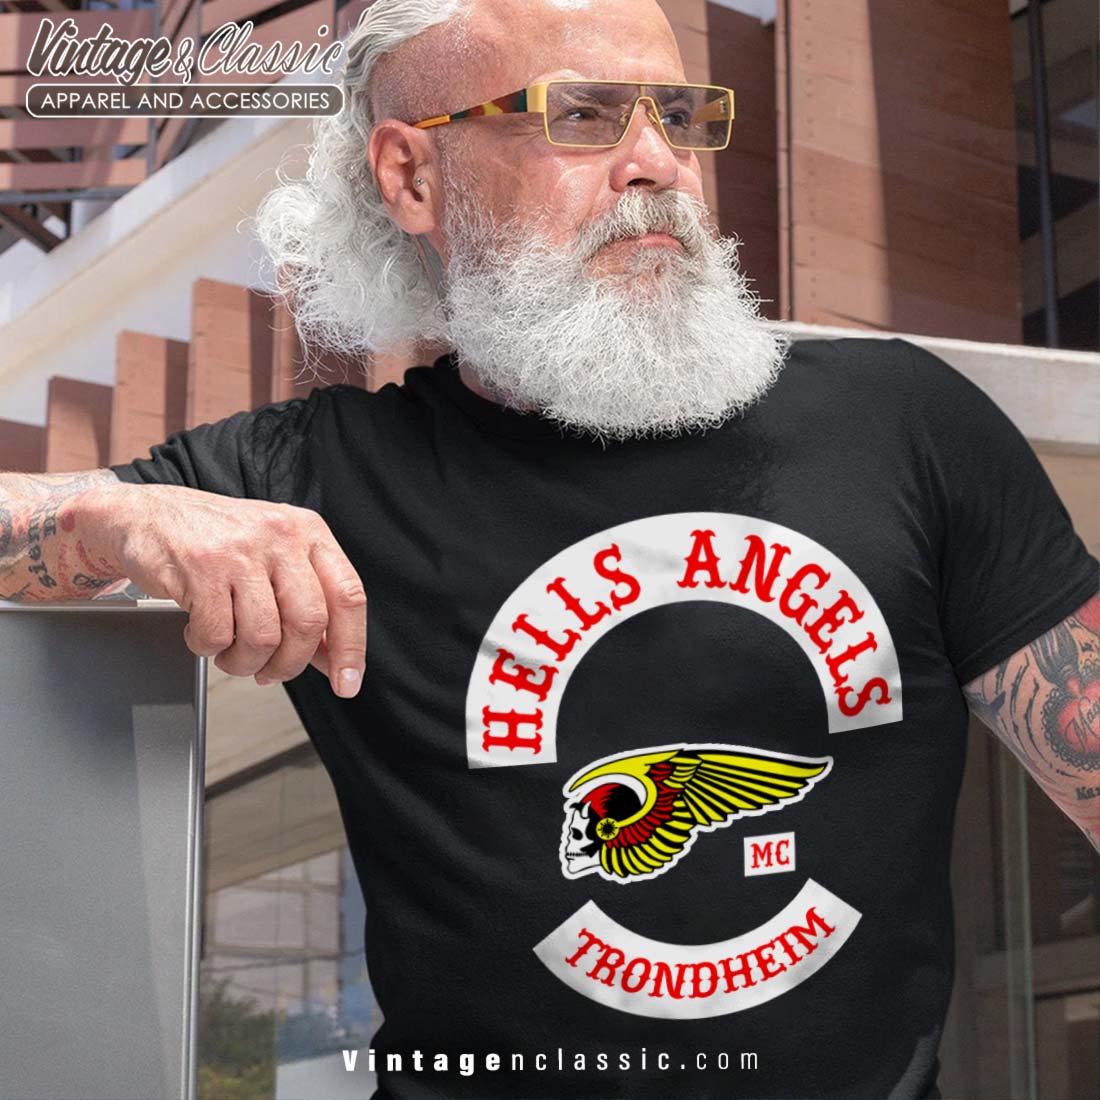 Hells Angels Mc Trondheim Shirt - Vintagenclassic Tee